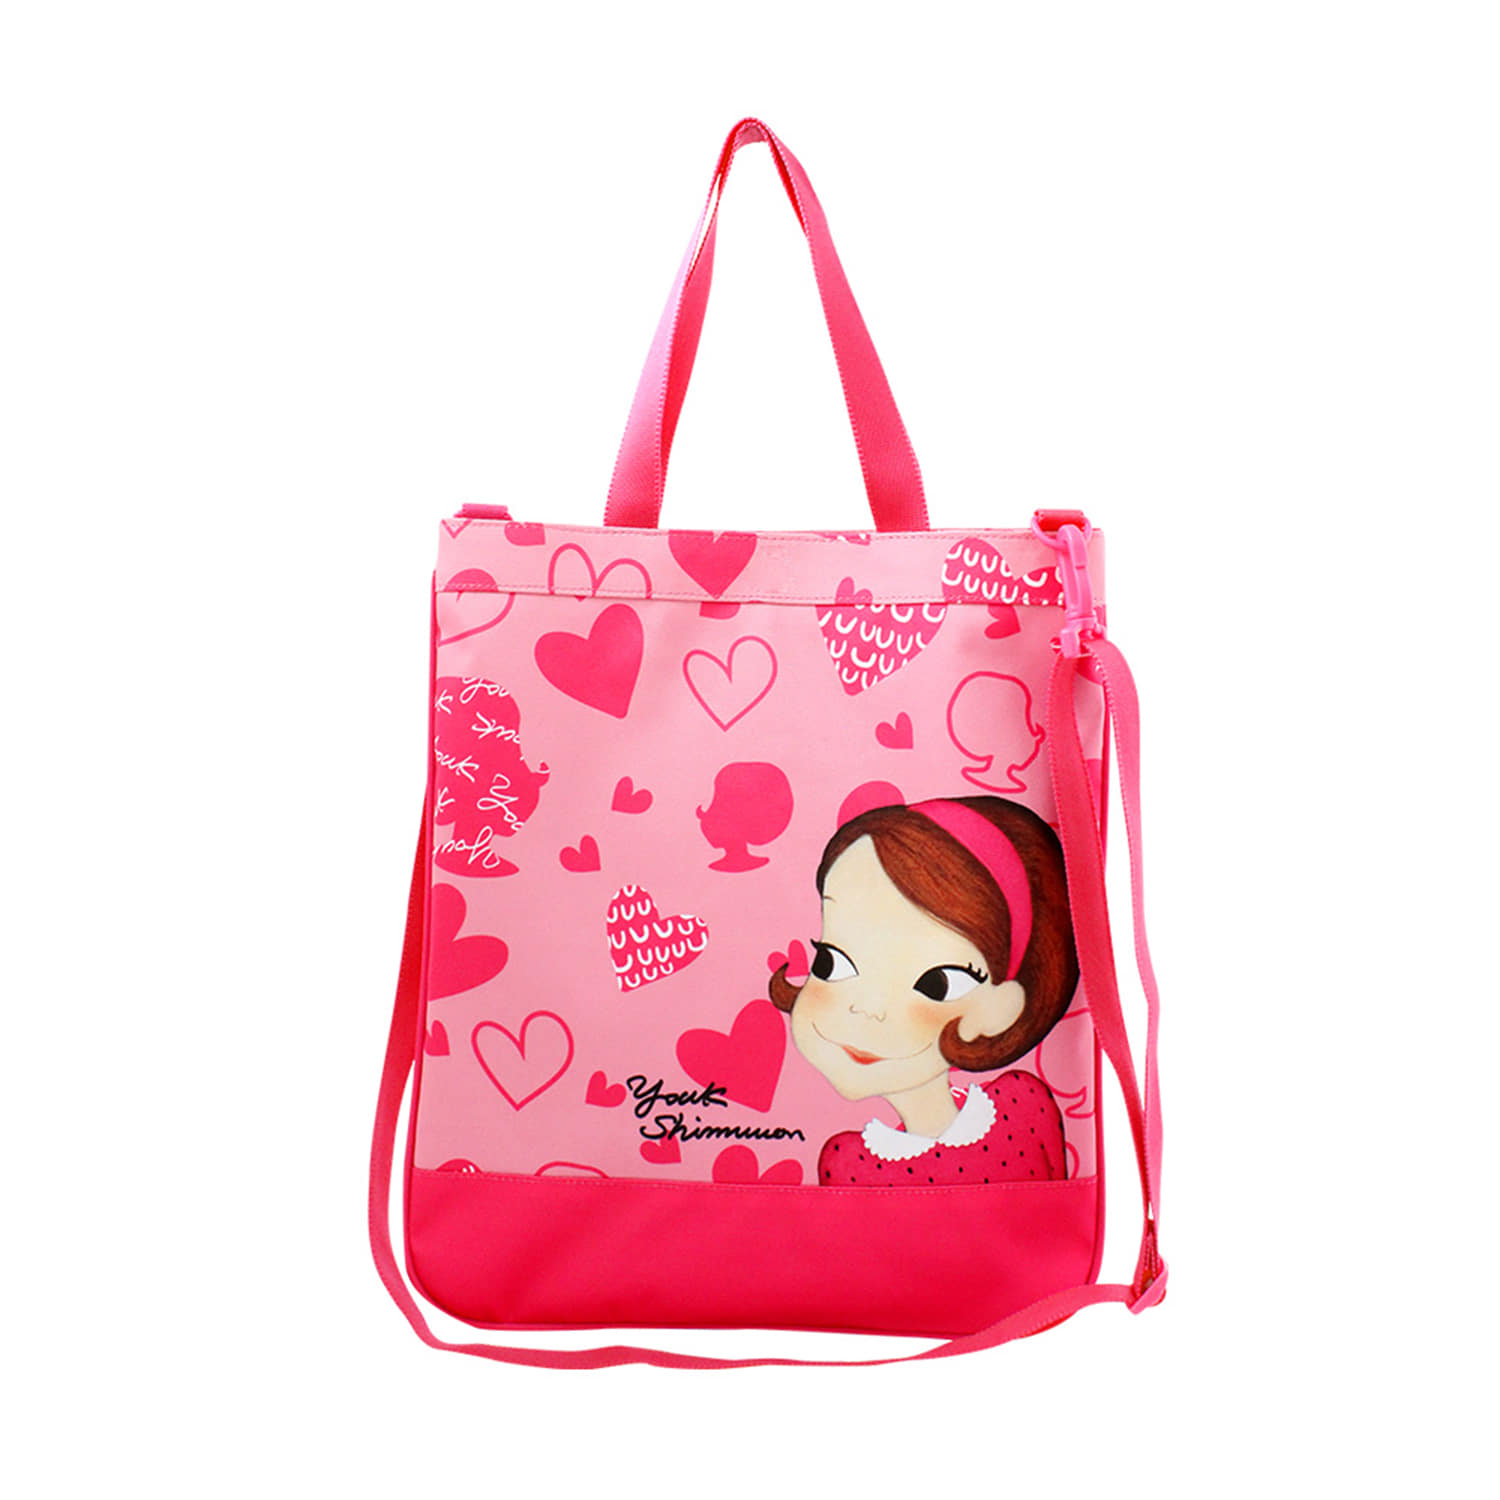 Kids Heart second bag pink ria